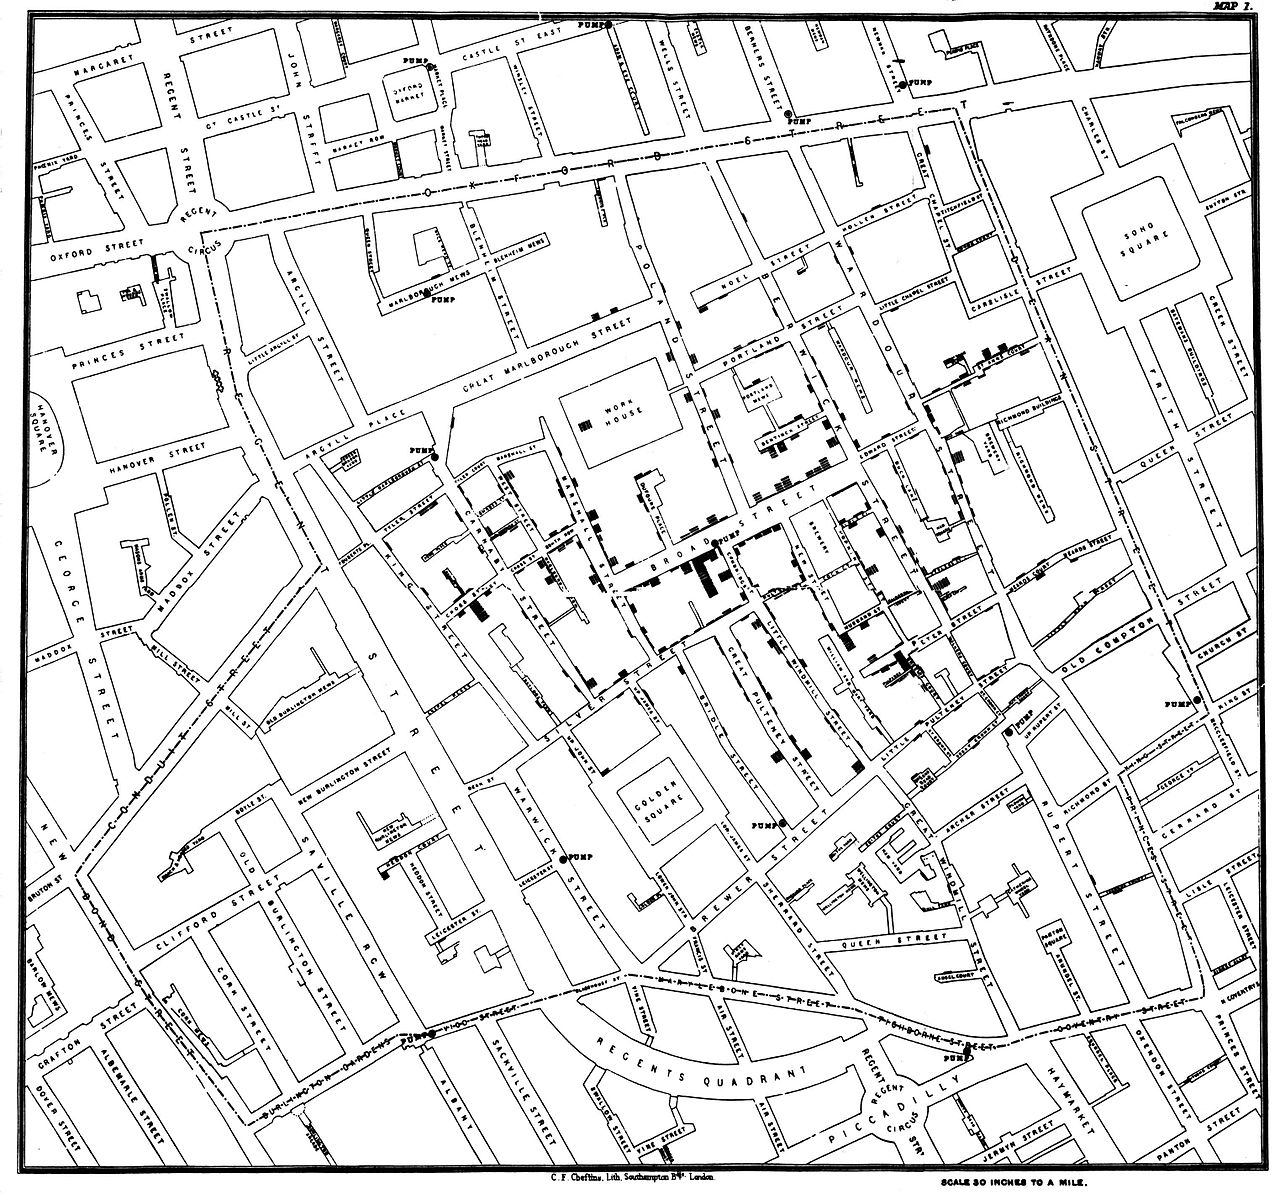 John Snow's original map of the 1854 Broad Street cholera outbreak. Source: Wikipedia.